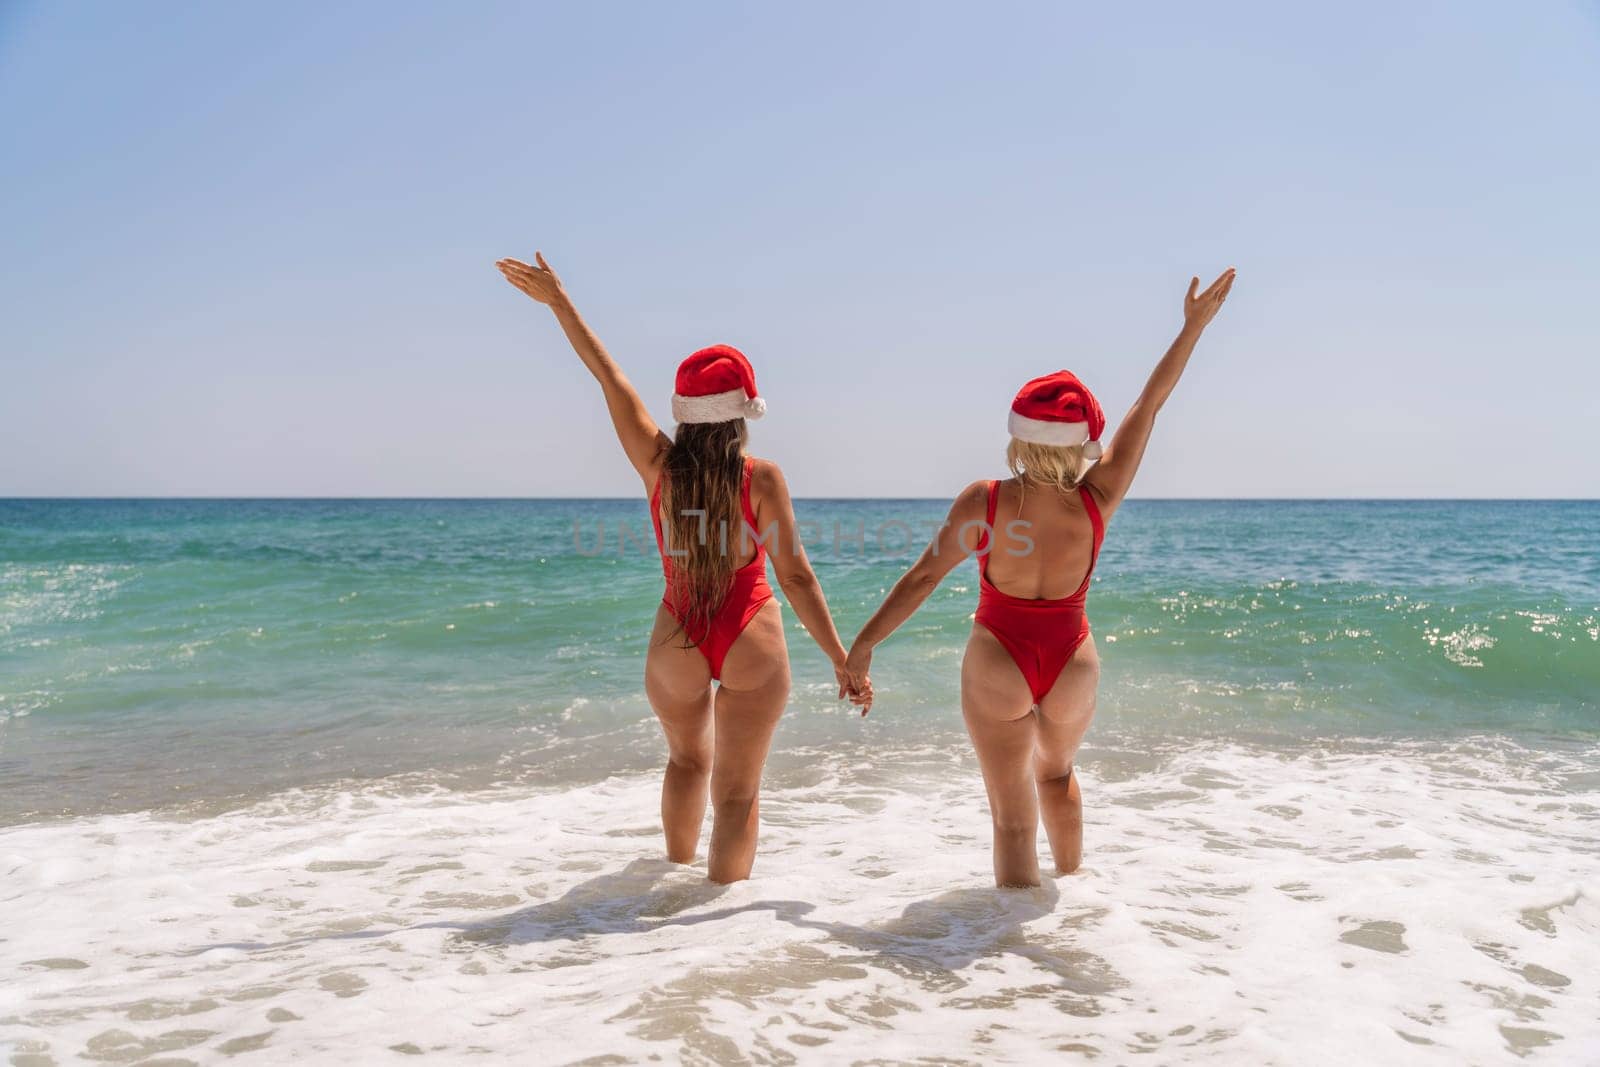 Women Santa hats ocean play. Seaside, beach daytime, enjoying beach fun. Two women in red swimsuits and Santa hats are enjoying themselves in the ocean waves and raising their hands up. by Matiunina